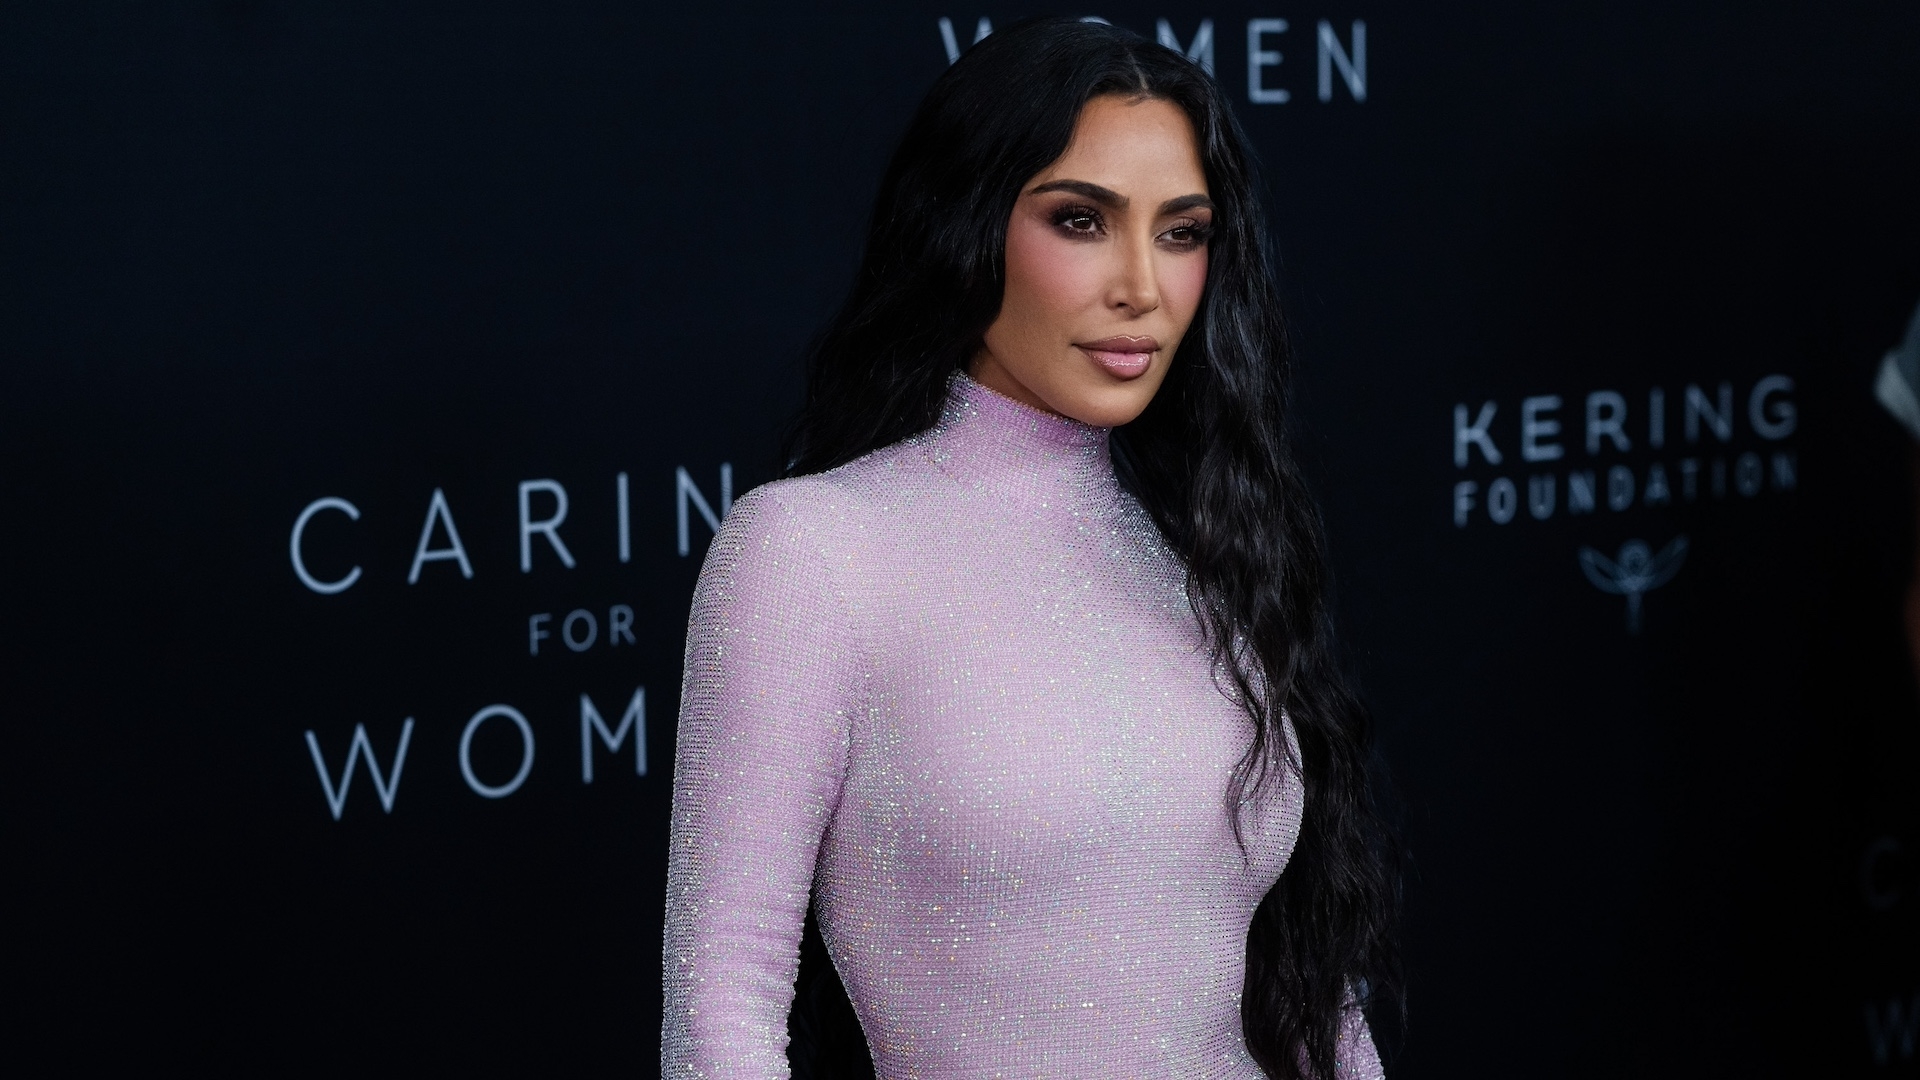 Kim Kardashian Introduces the SKIMS Ultimate Nipple Bra